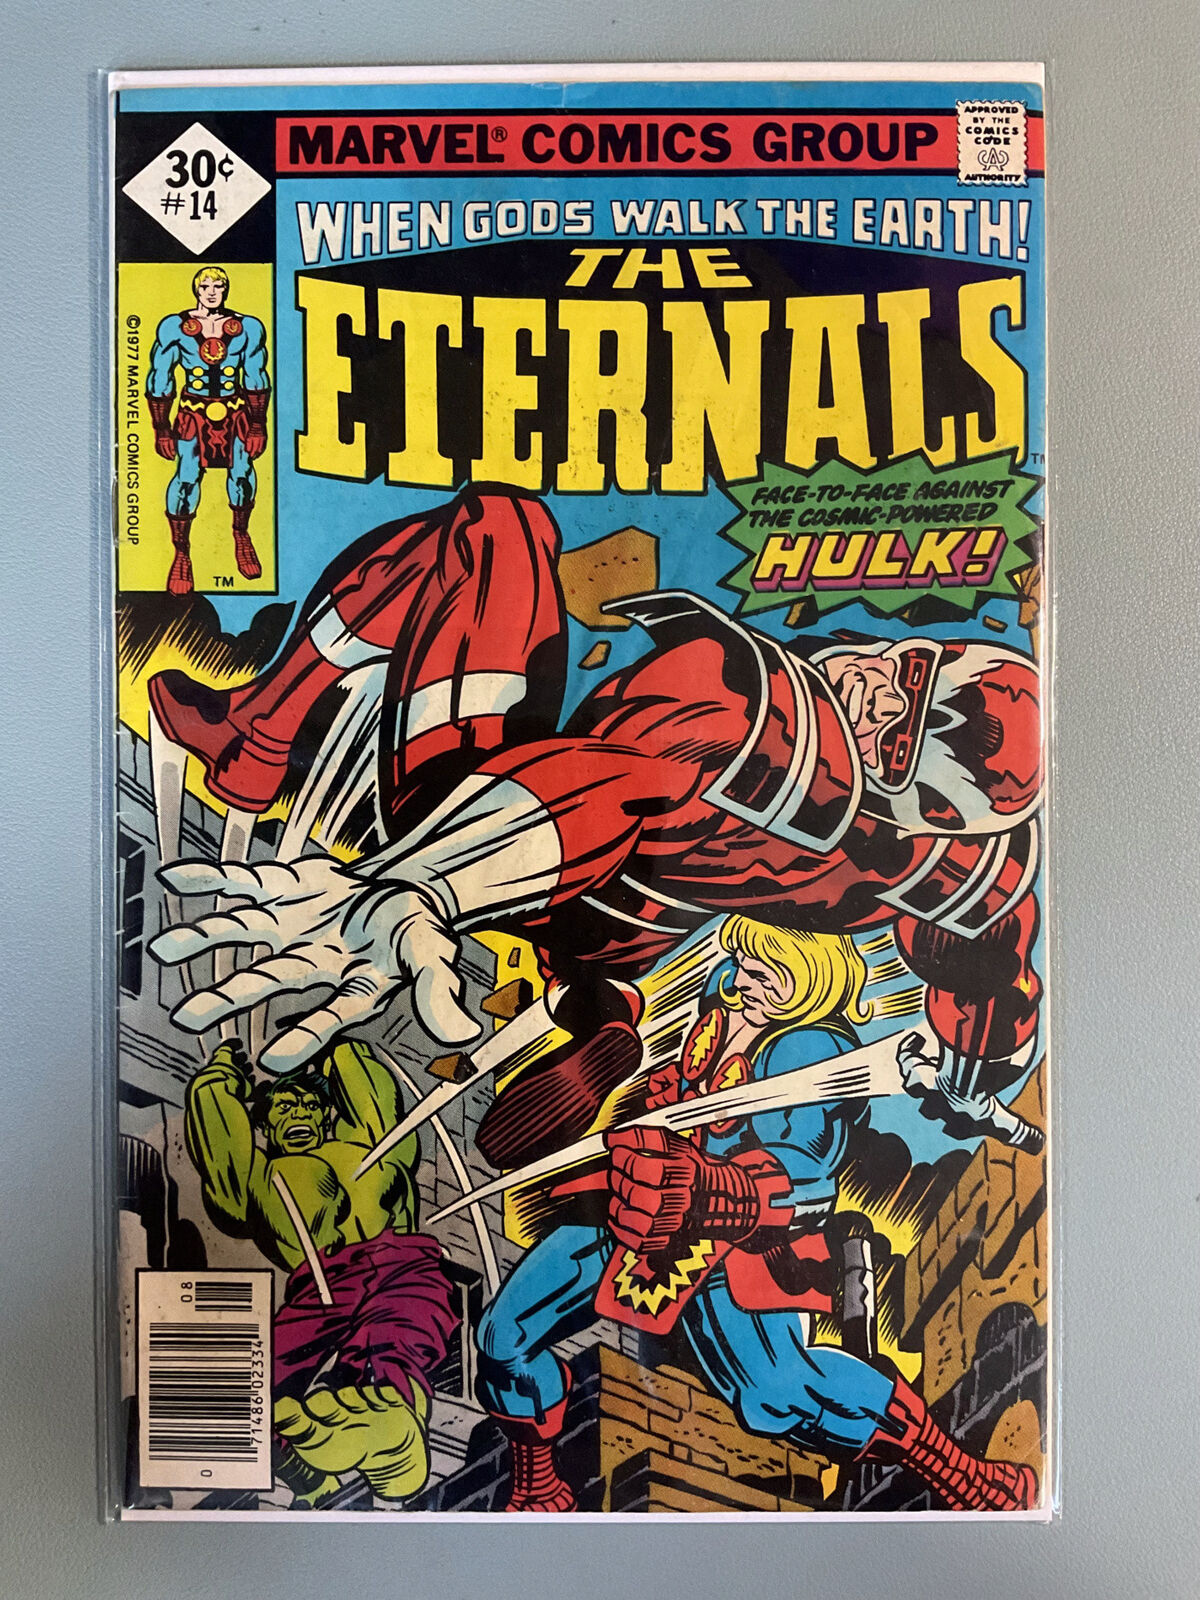 The Eternals(vol. 1) #14 - 1st App Hulk Robot - Marvel Comics Key Issue